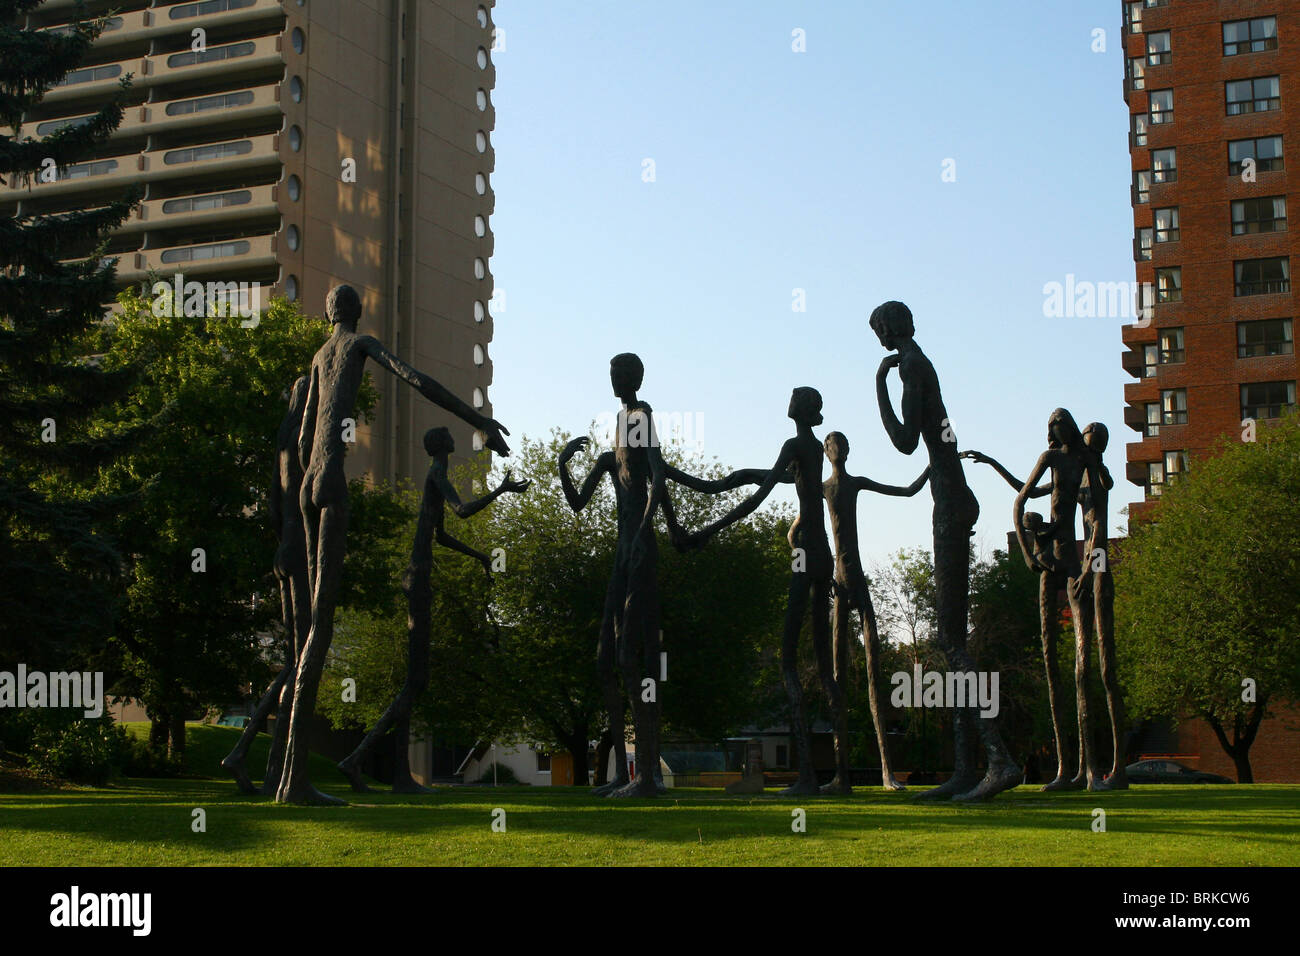 Familie Mann Statuen in Calgary, Alberta, Kanada Stockfoto